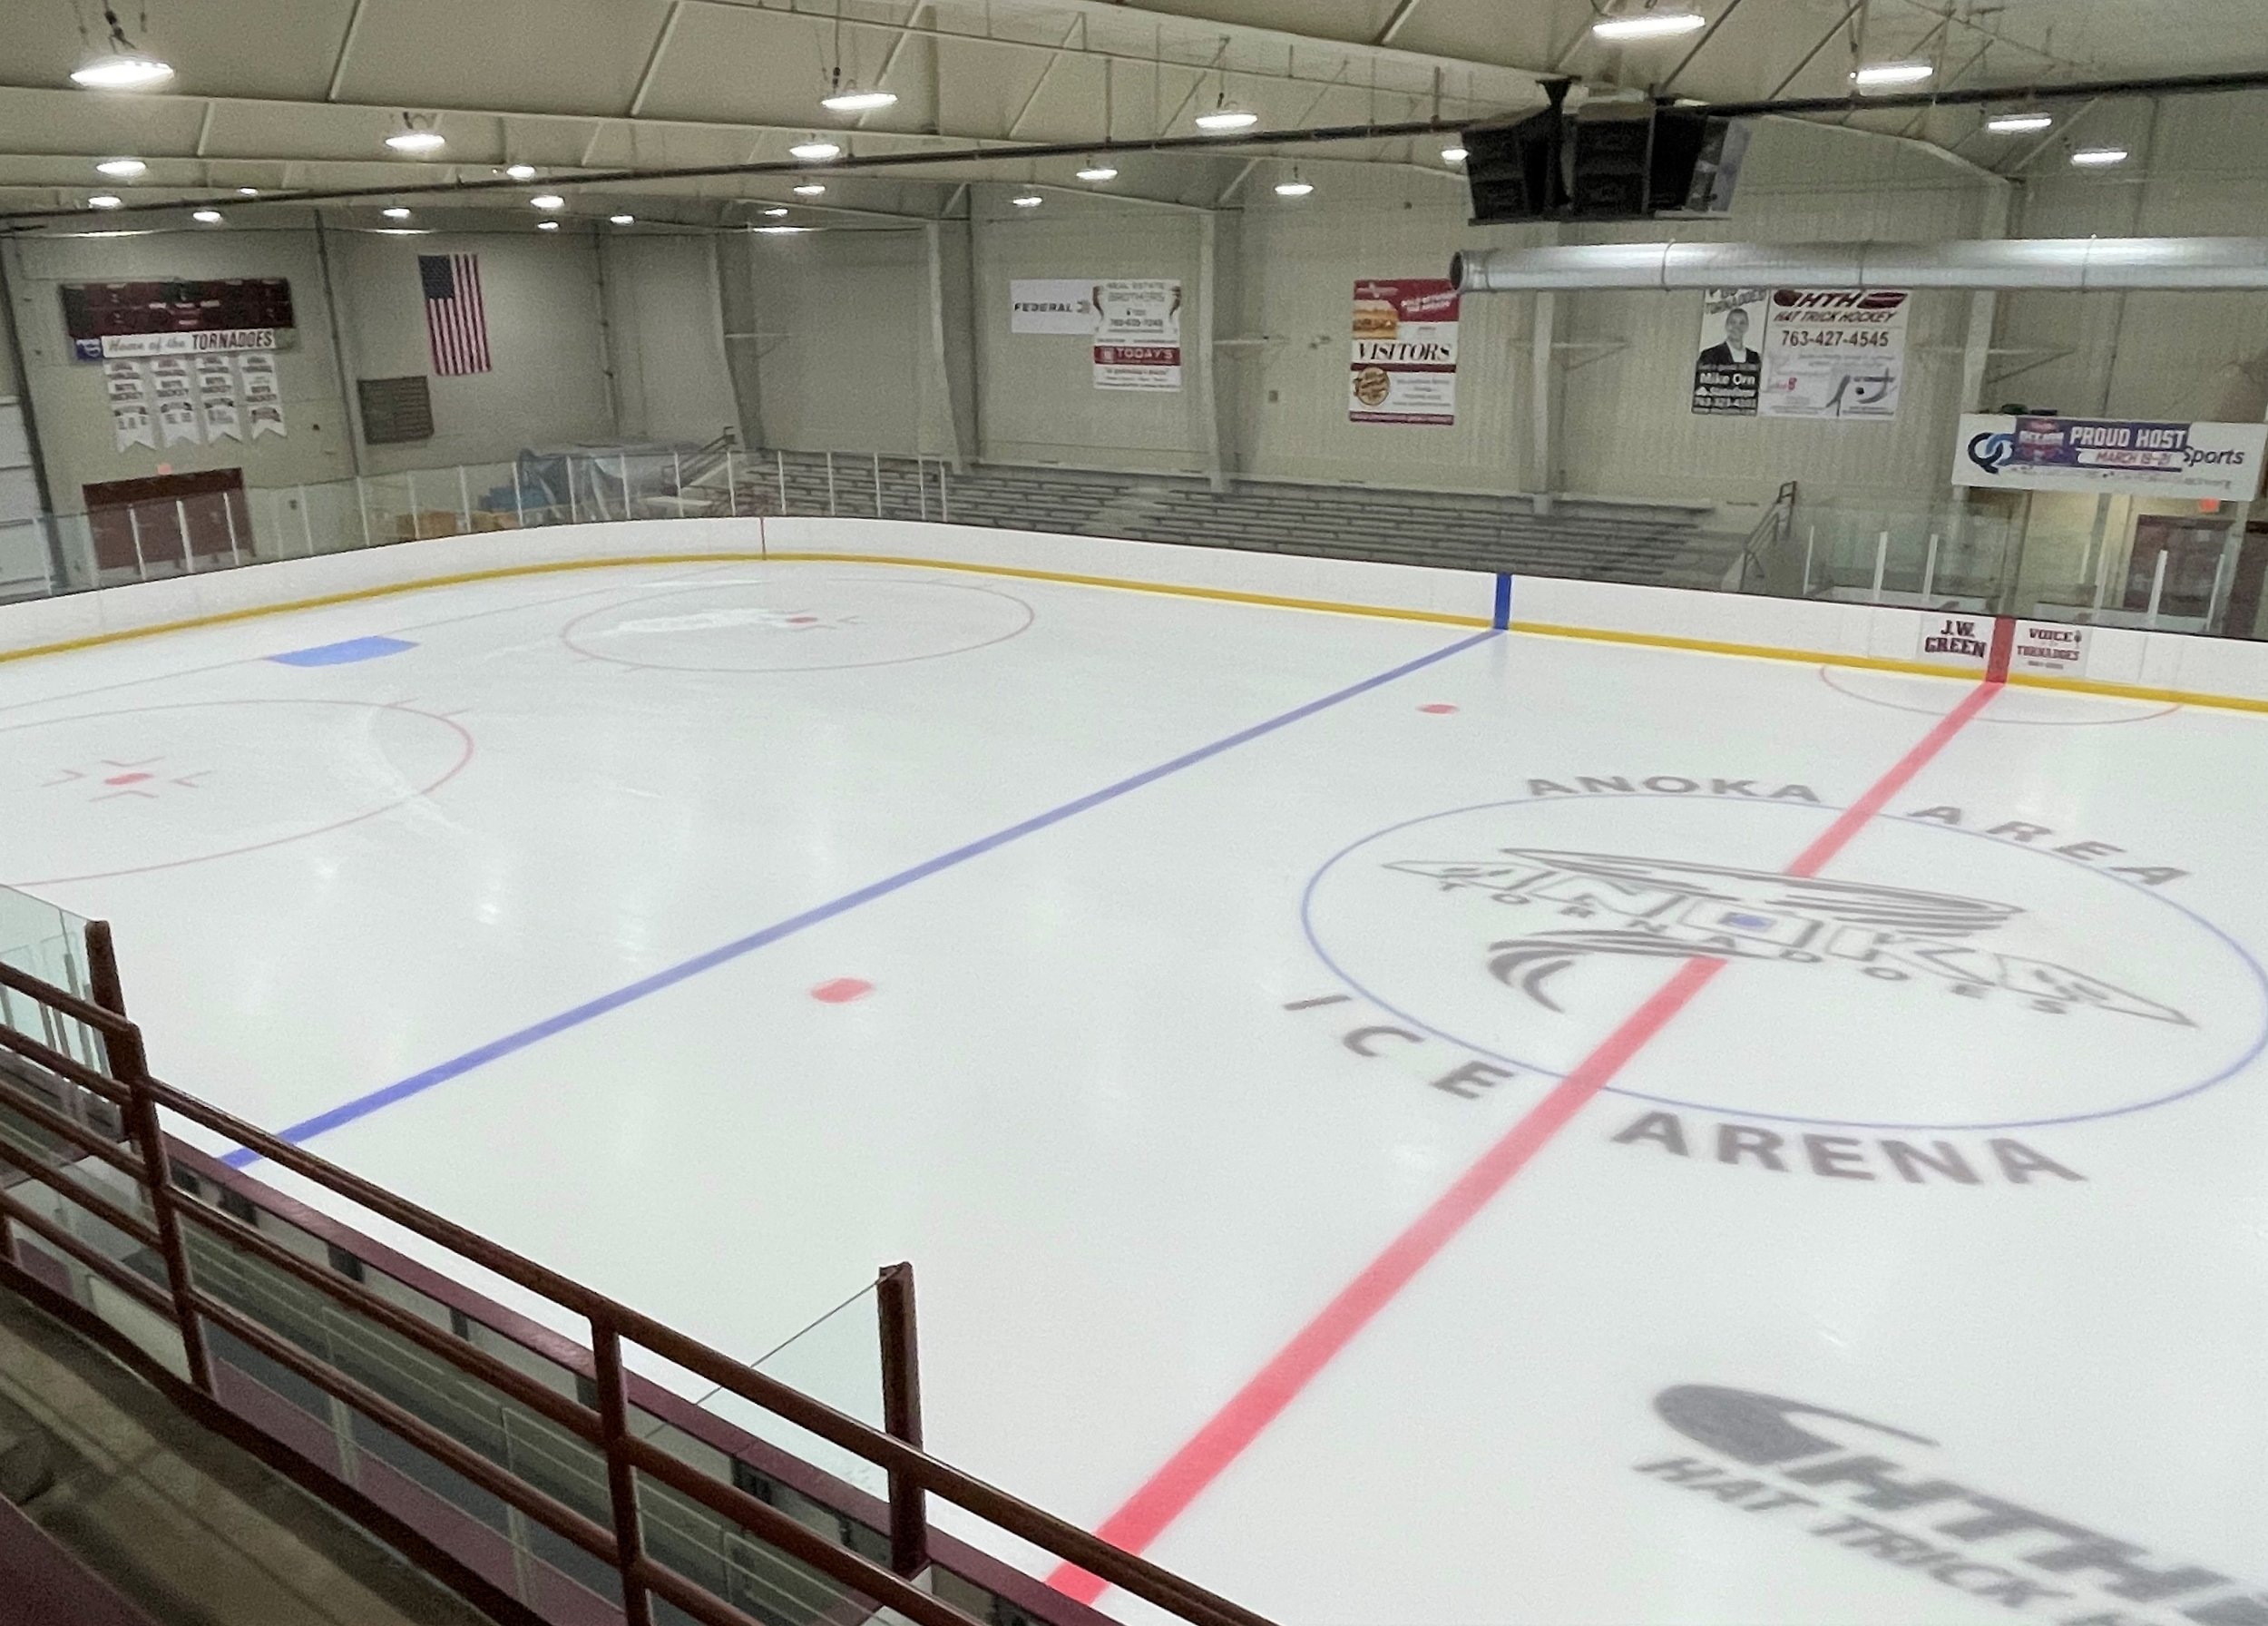 Anoka Area Ice Arena